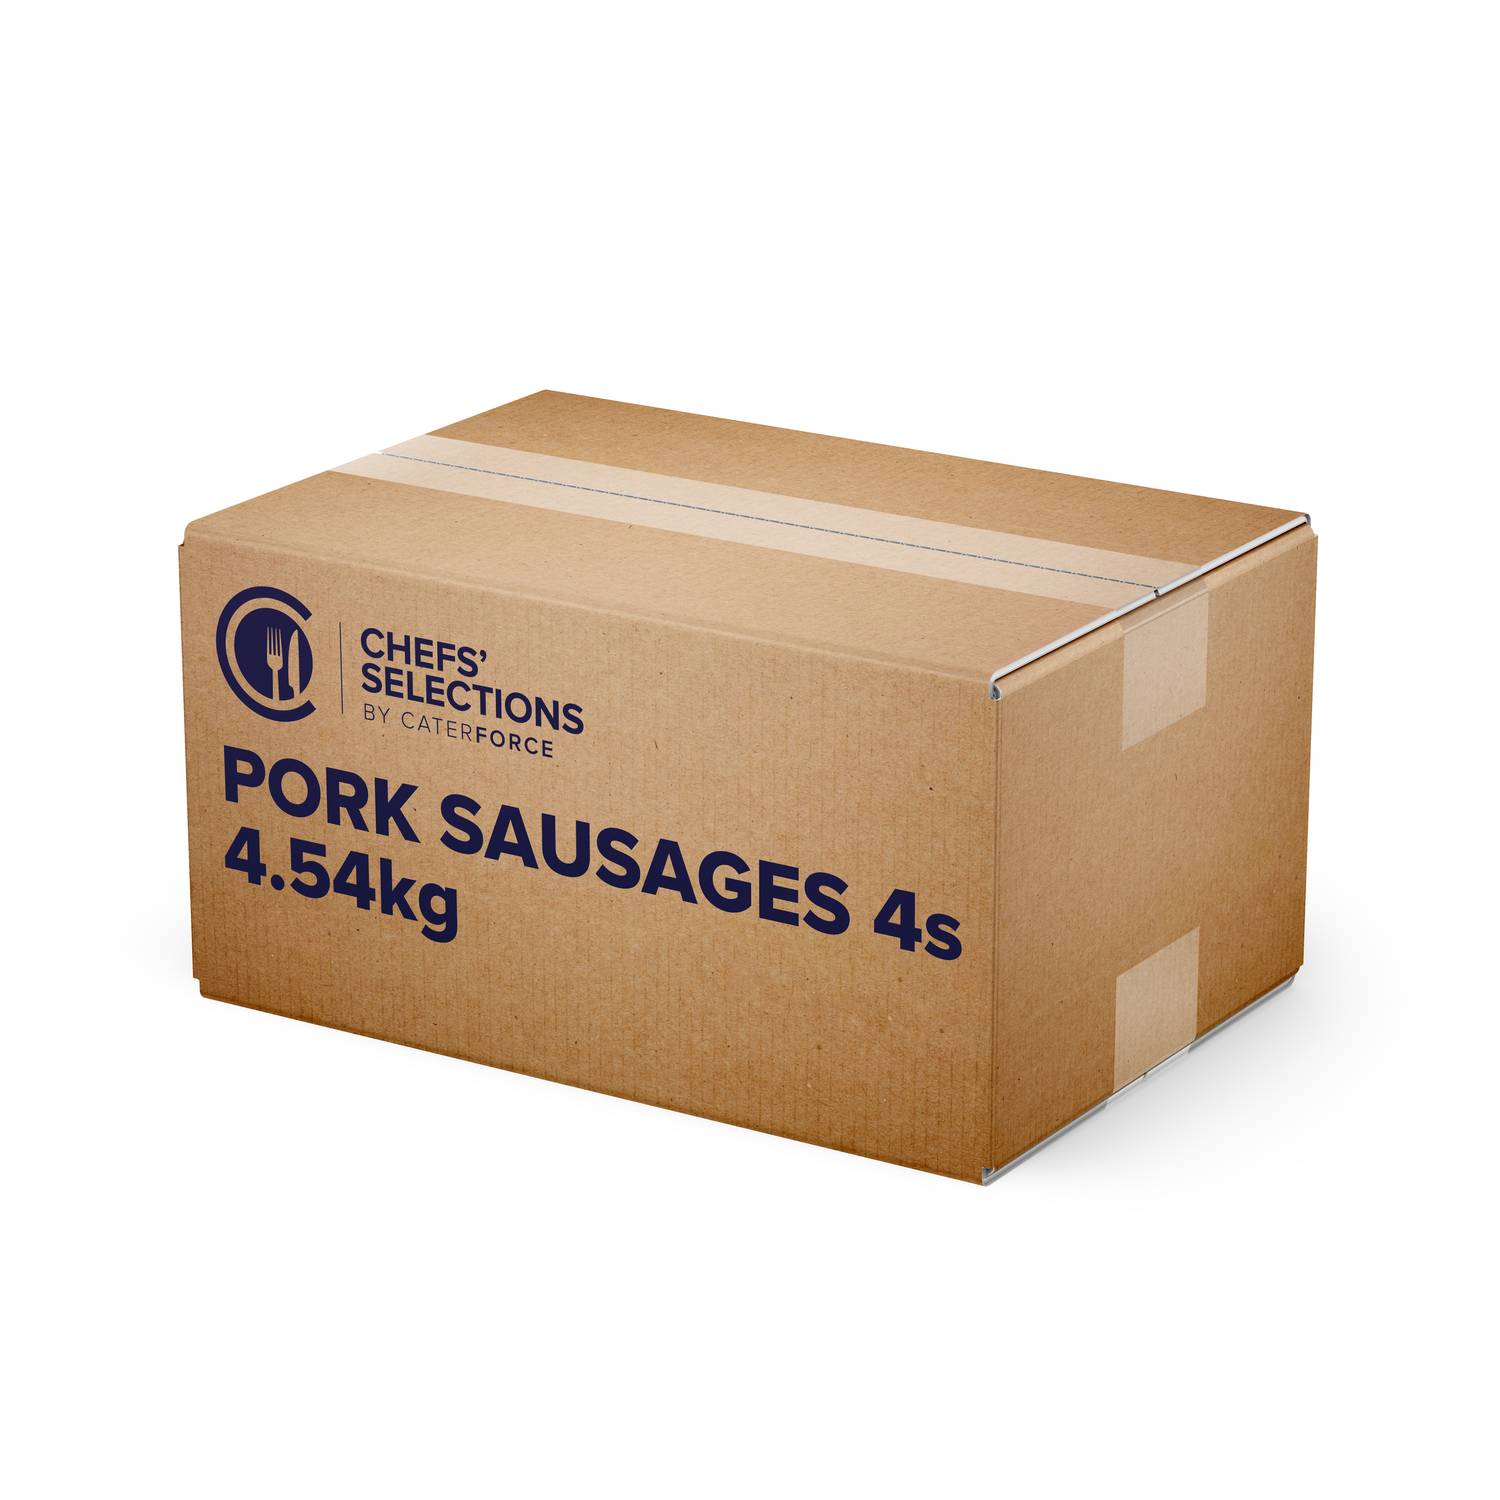 Chefs’ Selections Pork Sausages 4’s (1 x 4.54kg)